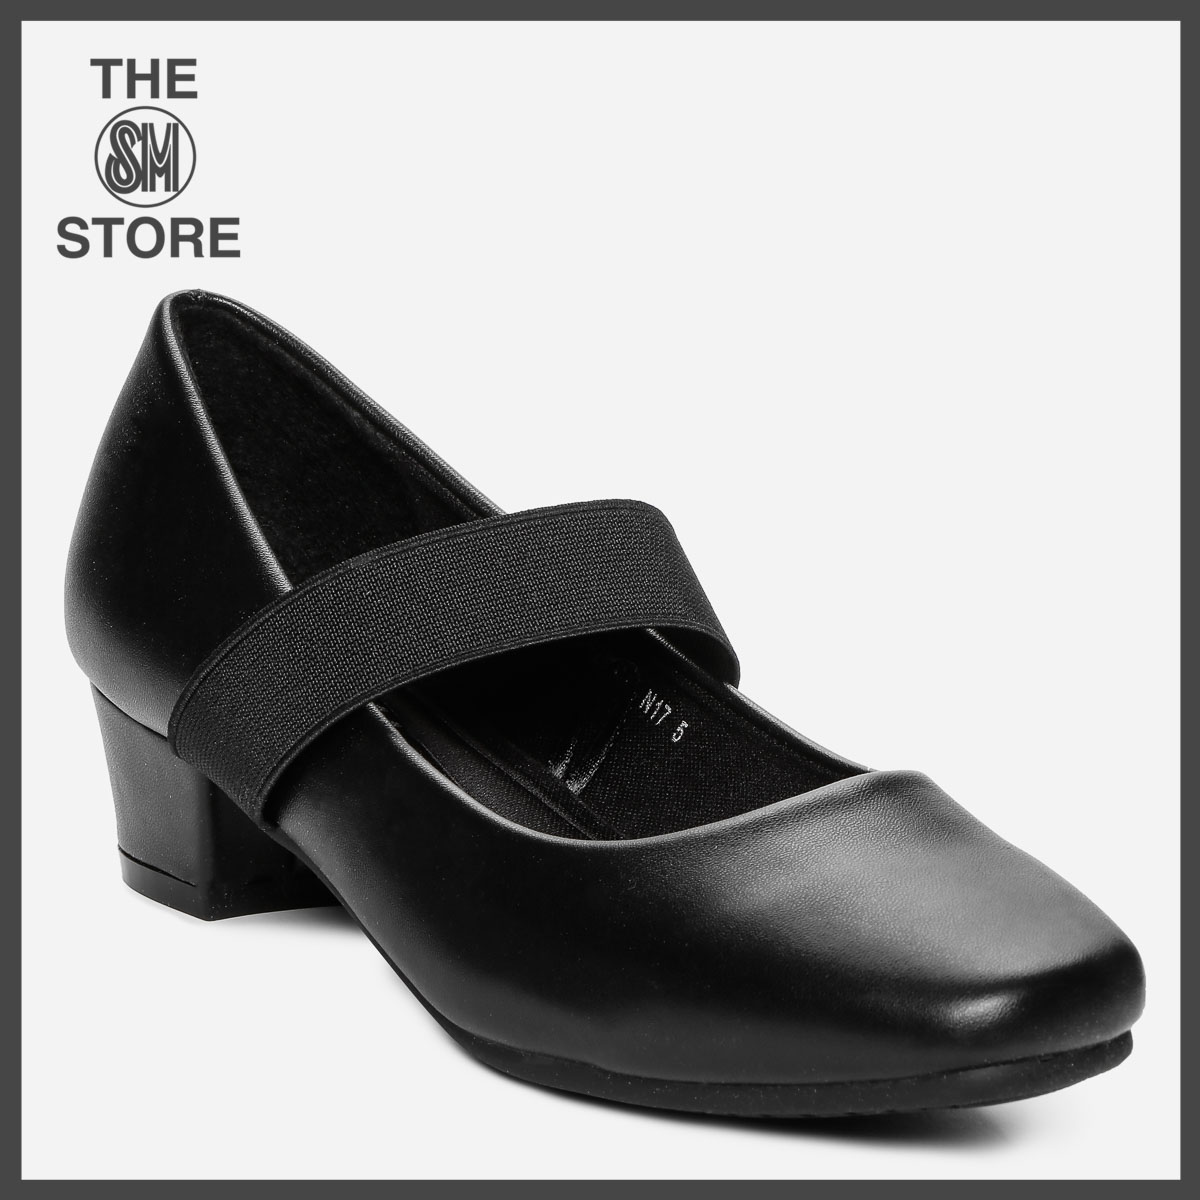 parisian black shoes with heels